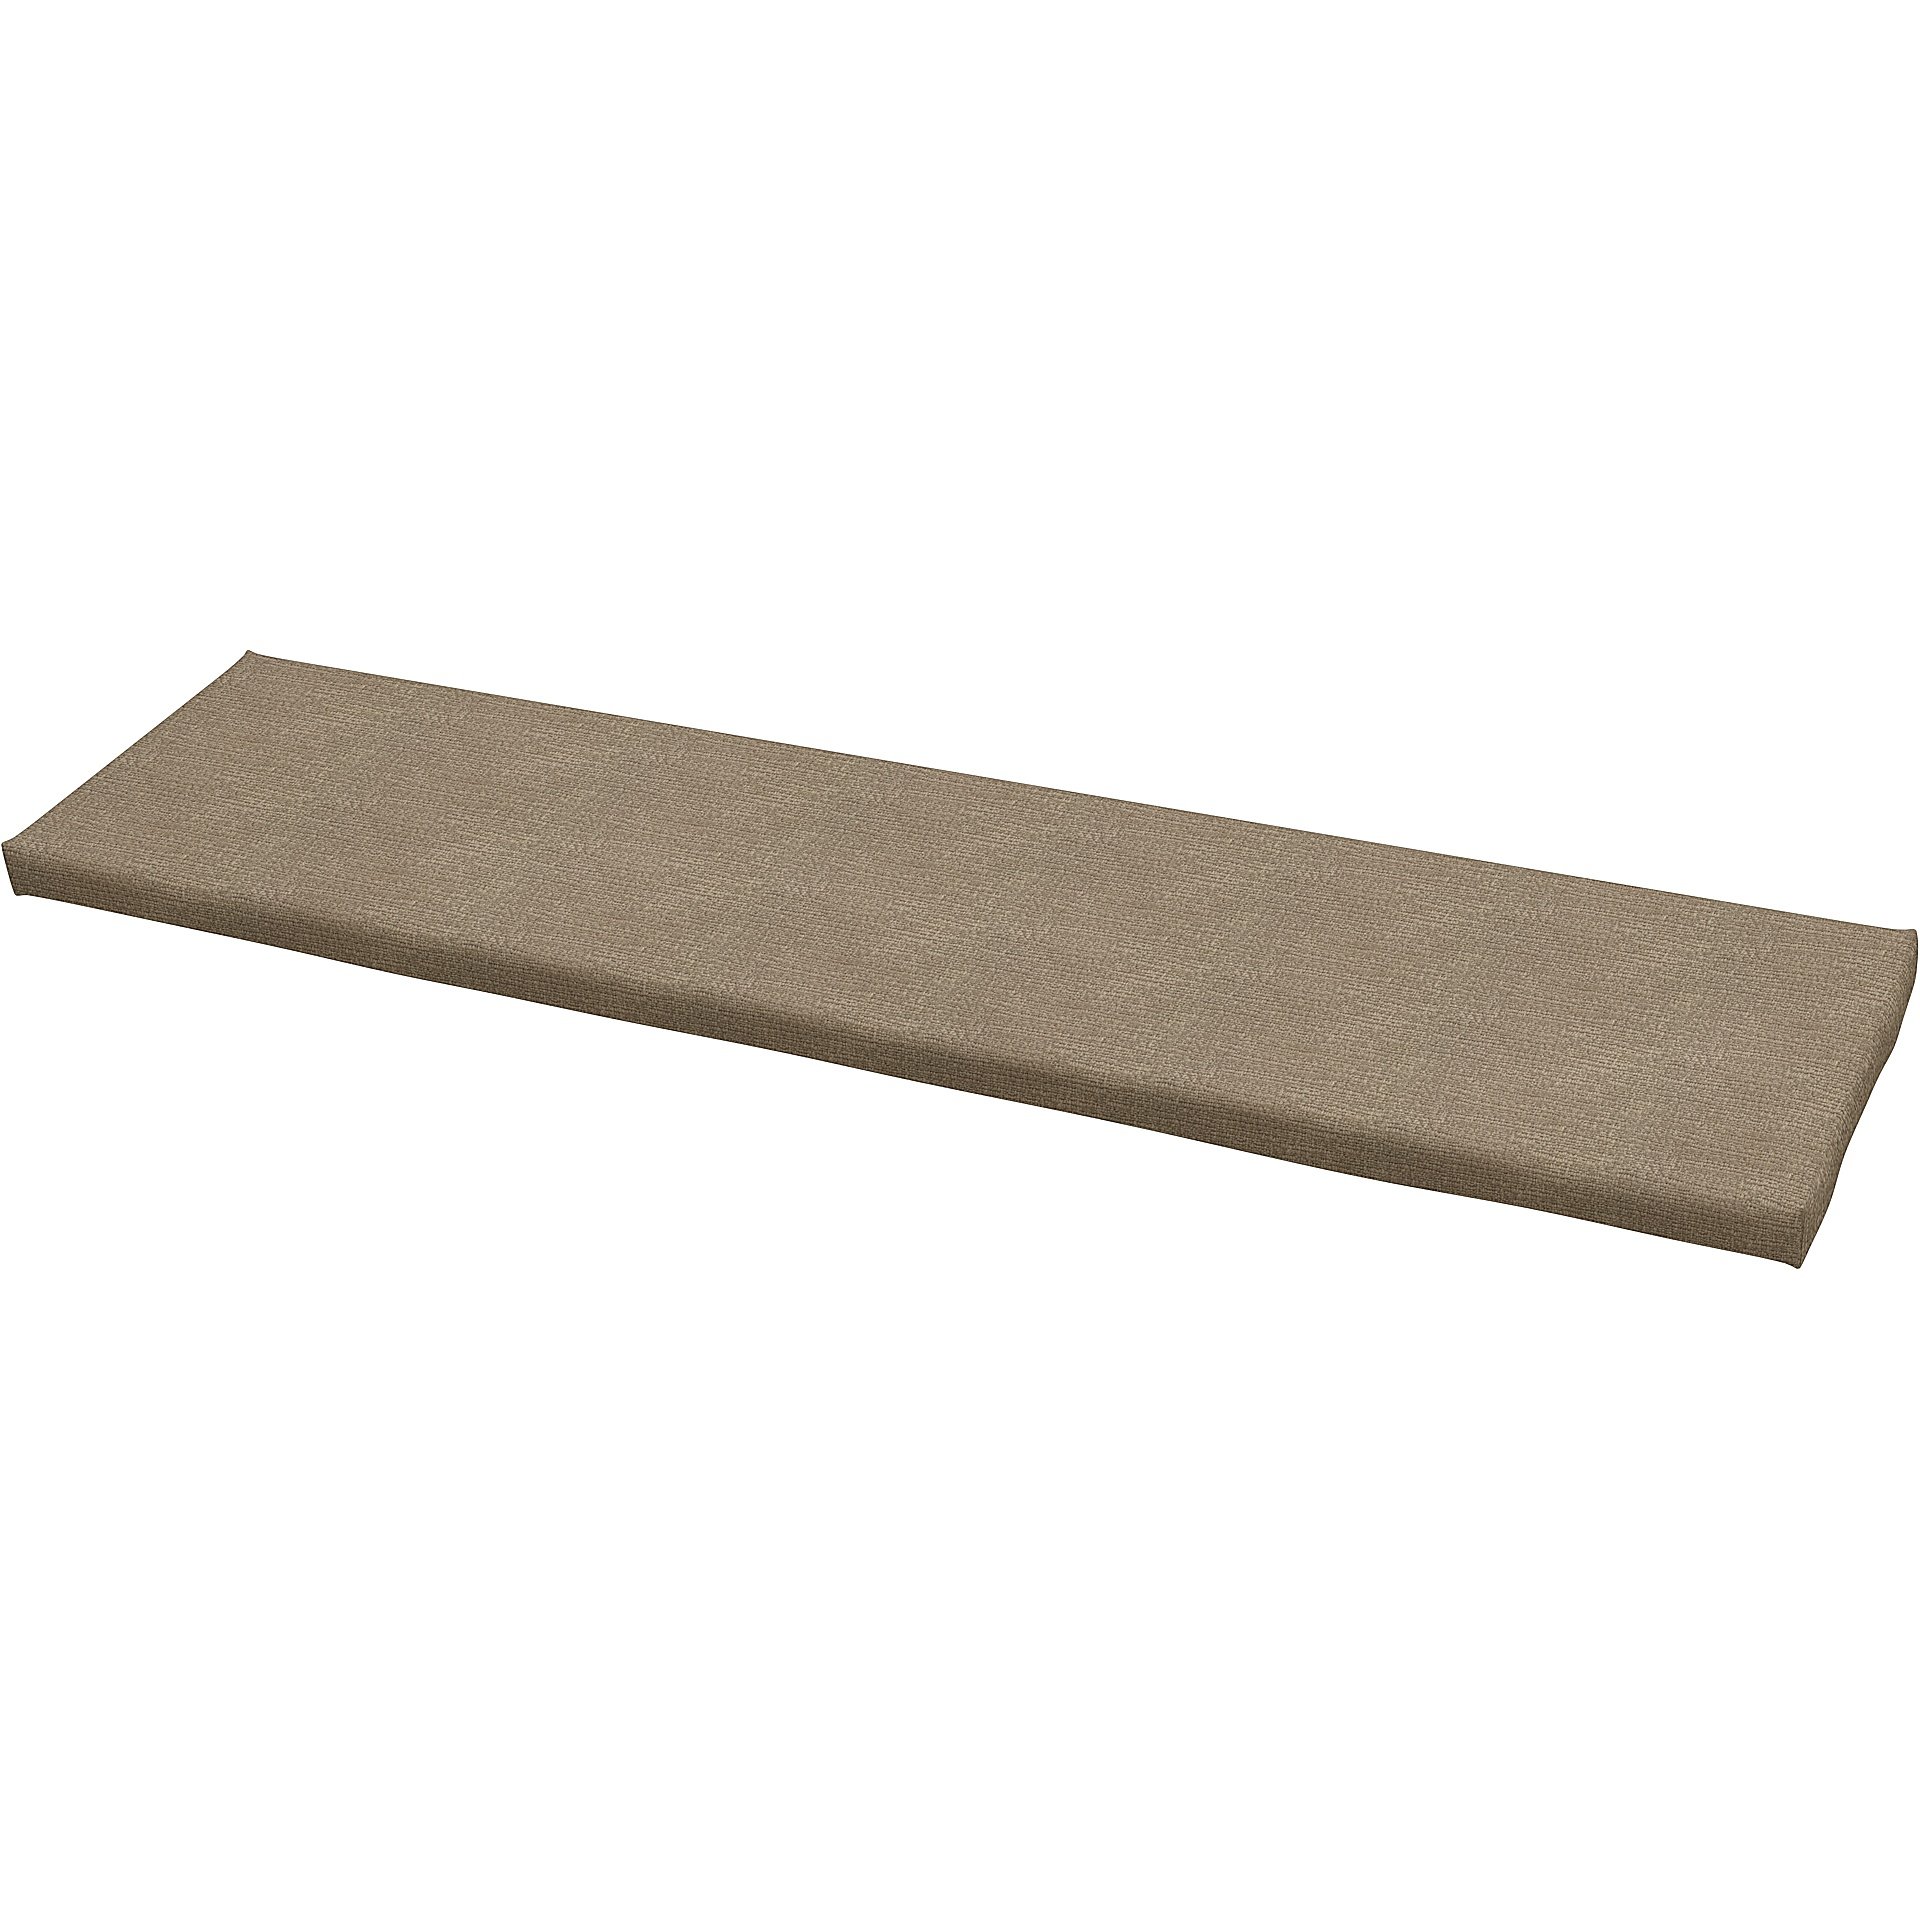 IKEA - Universal bench cushion cover 140x35x3,5 cm, Camel, Boucle & Texture - Bemz